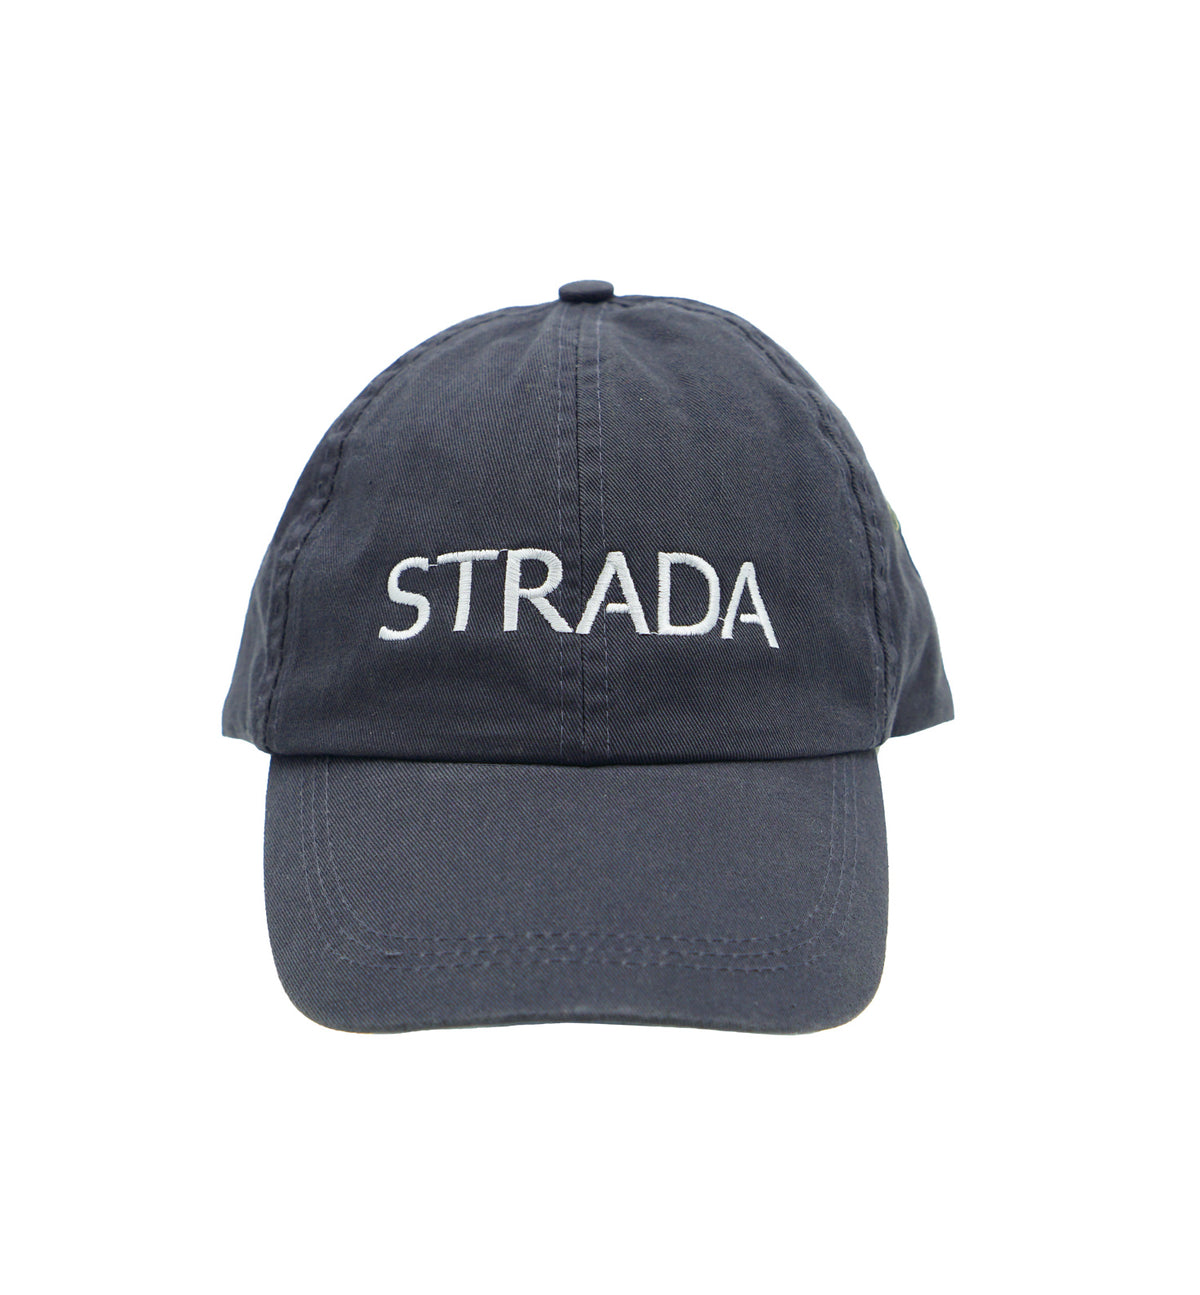 STRADA Hat